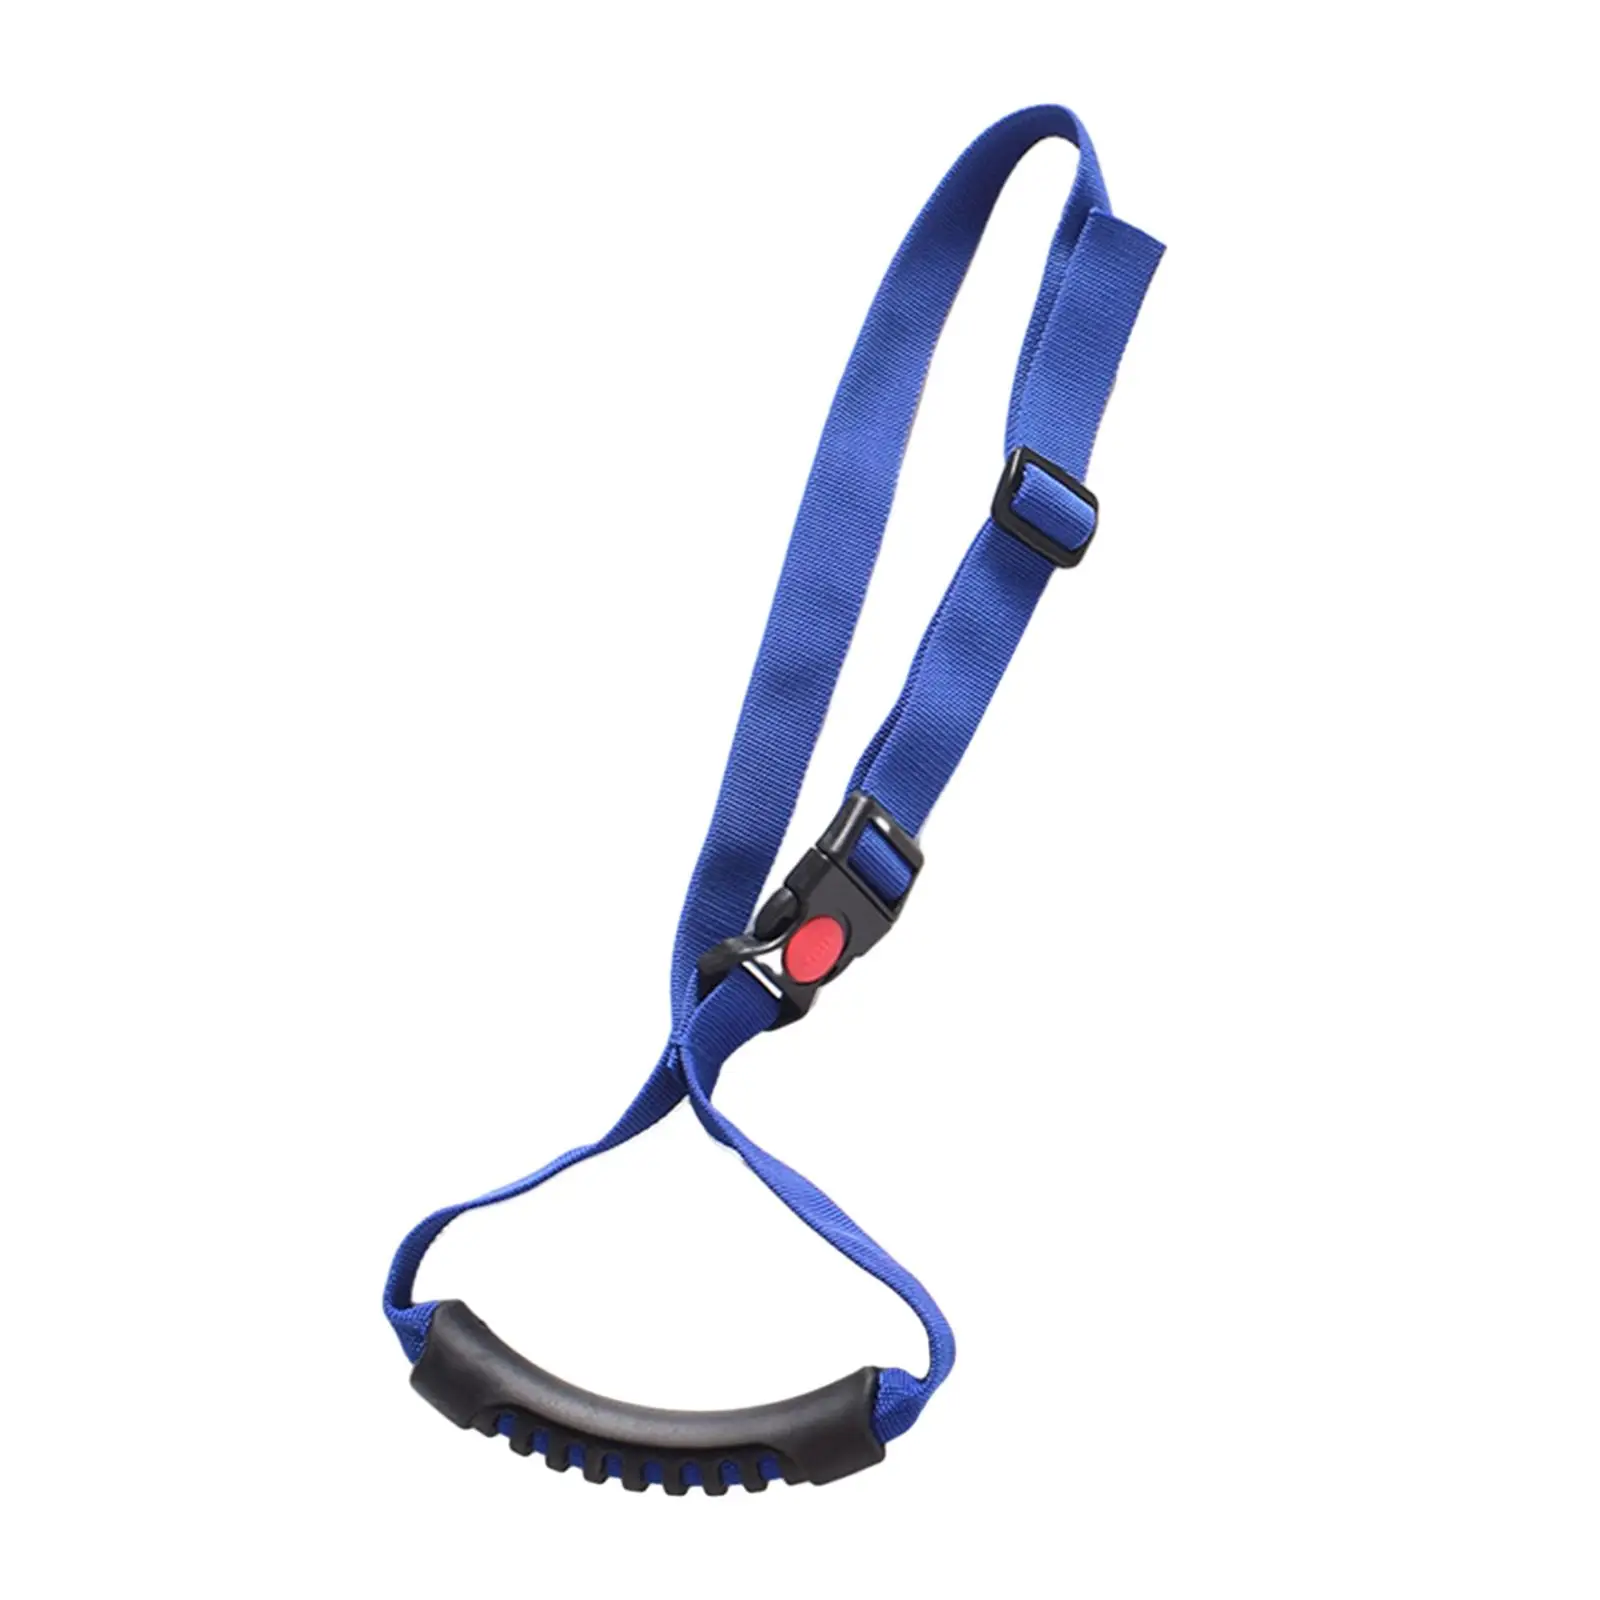 Car Nylon Grip Handle Premium Portable Adjustable Standing Aid Safety Handle